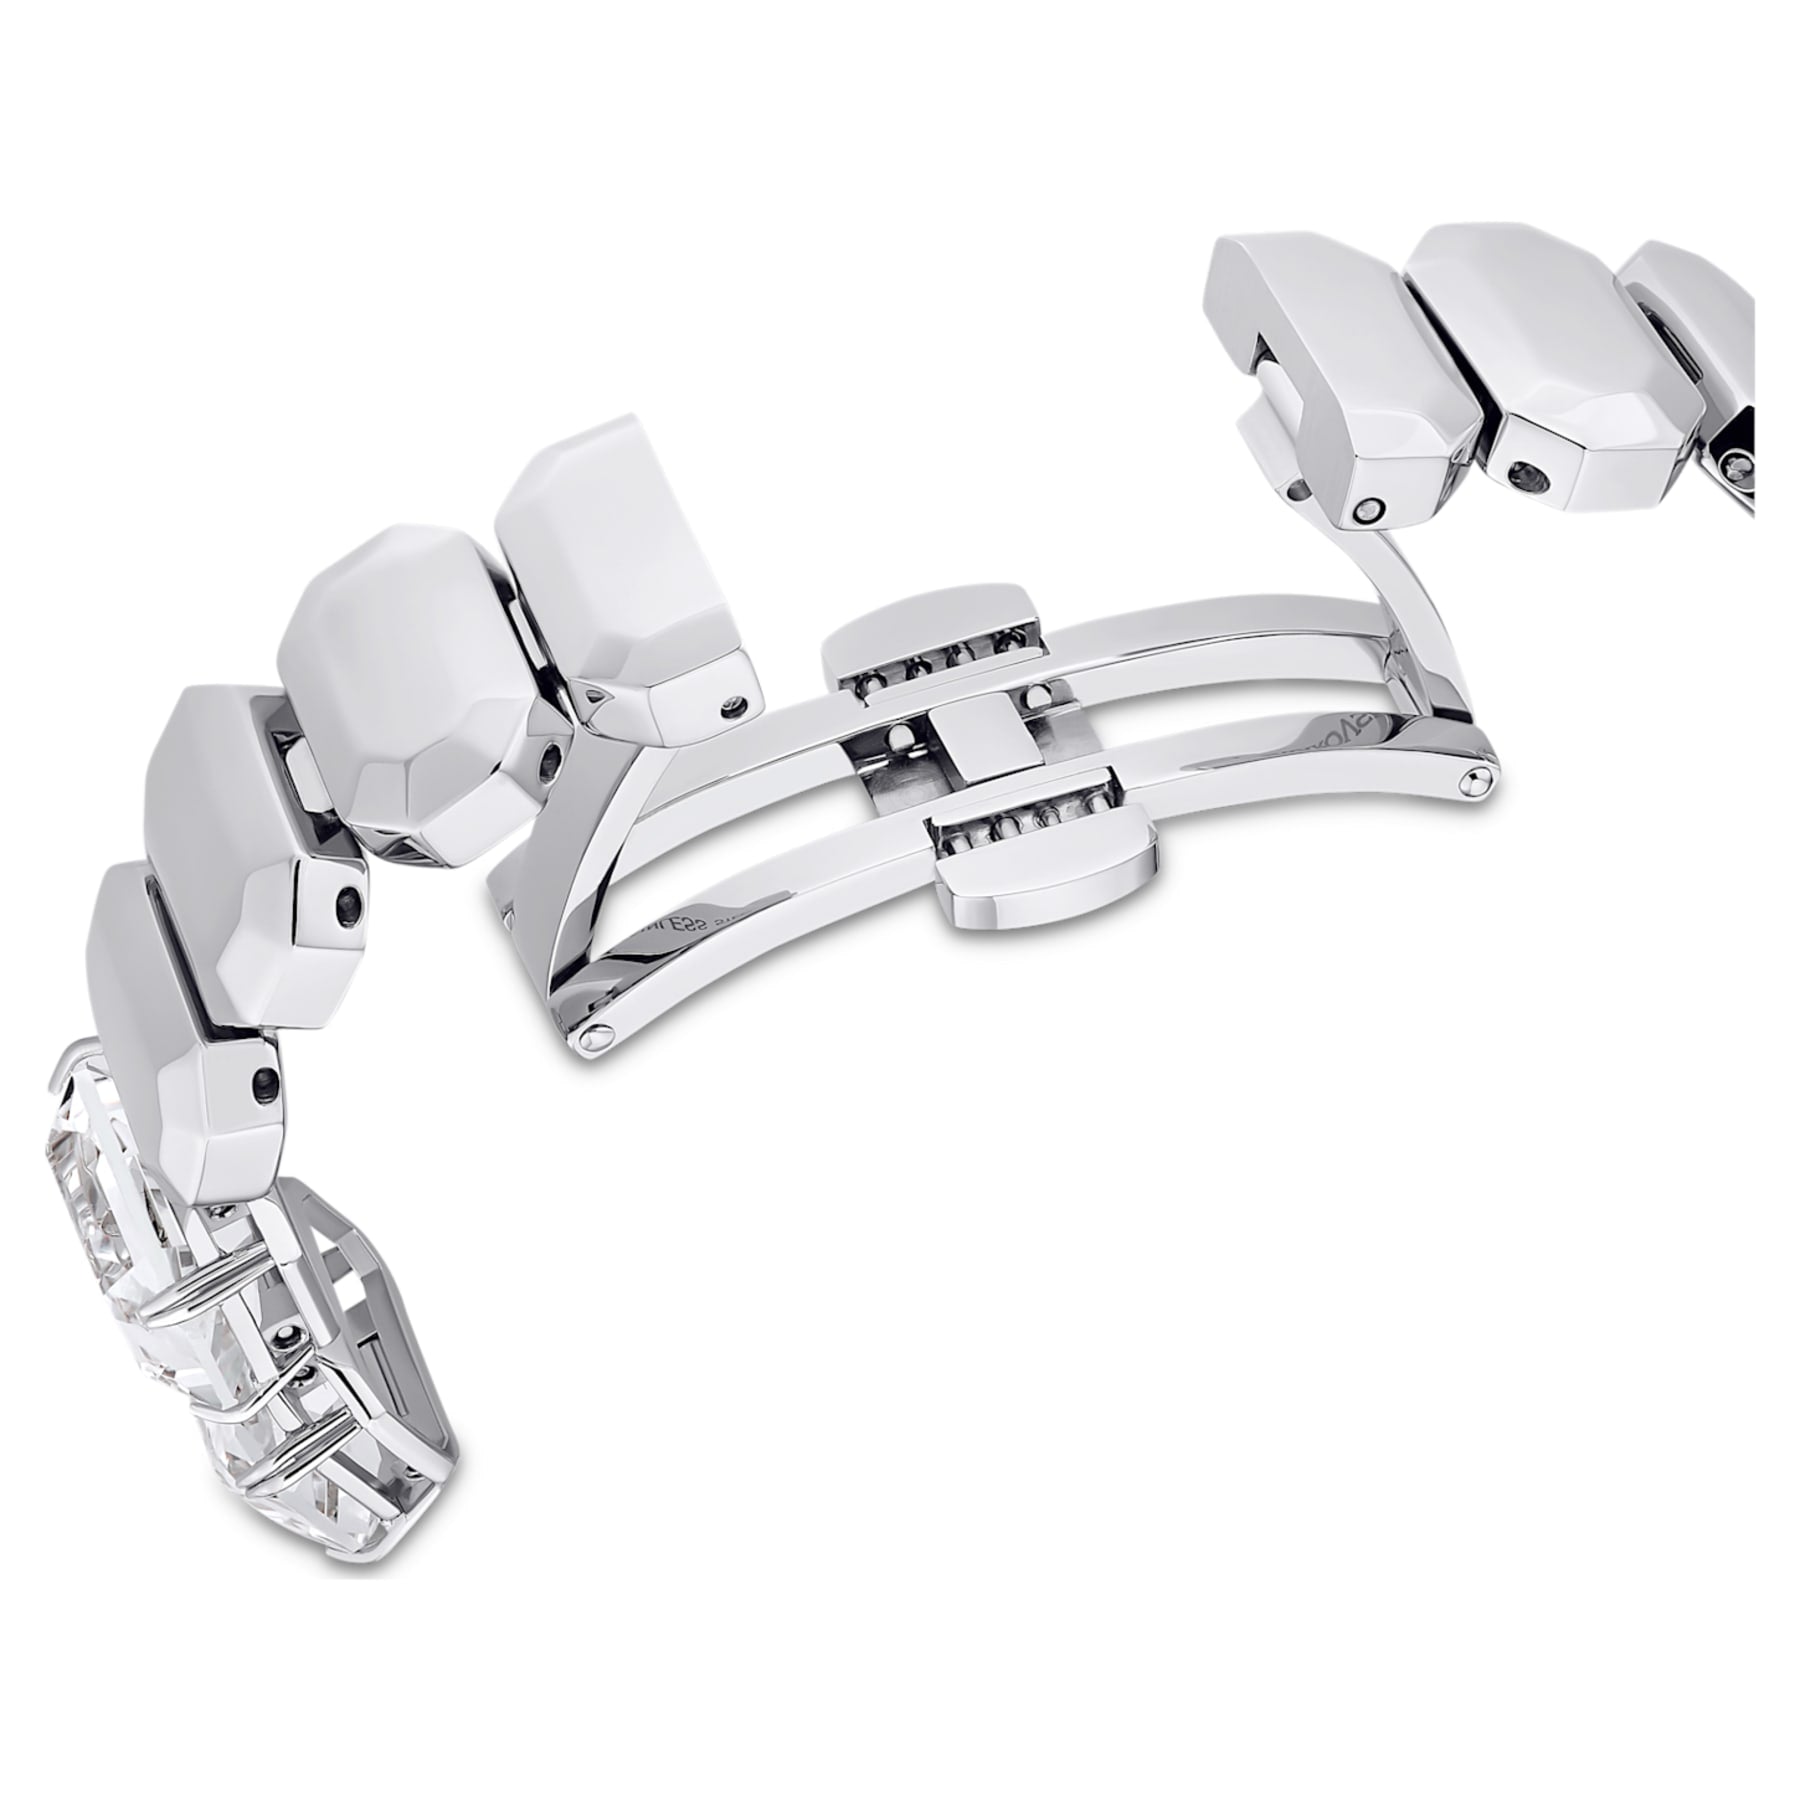 Millenia - White Silver - Watch - Swarovski